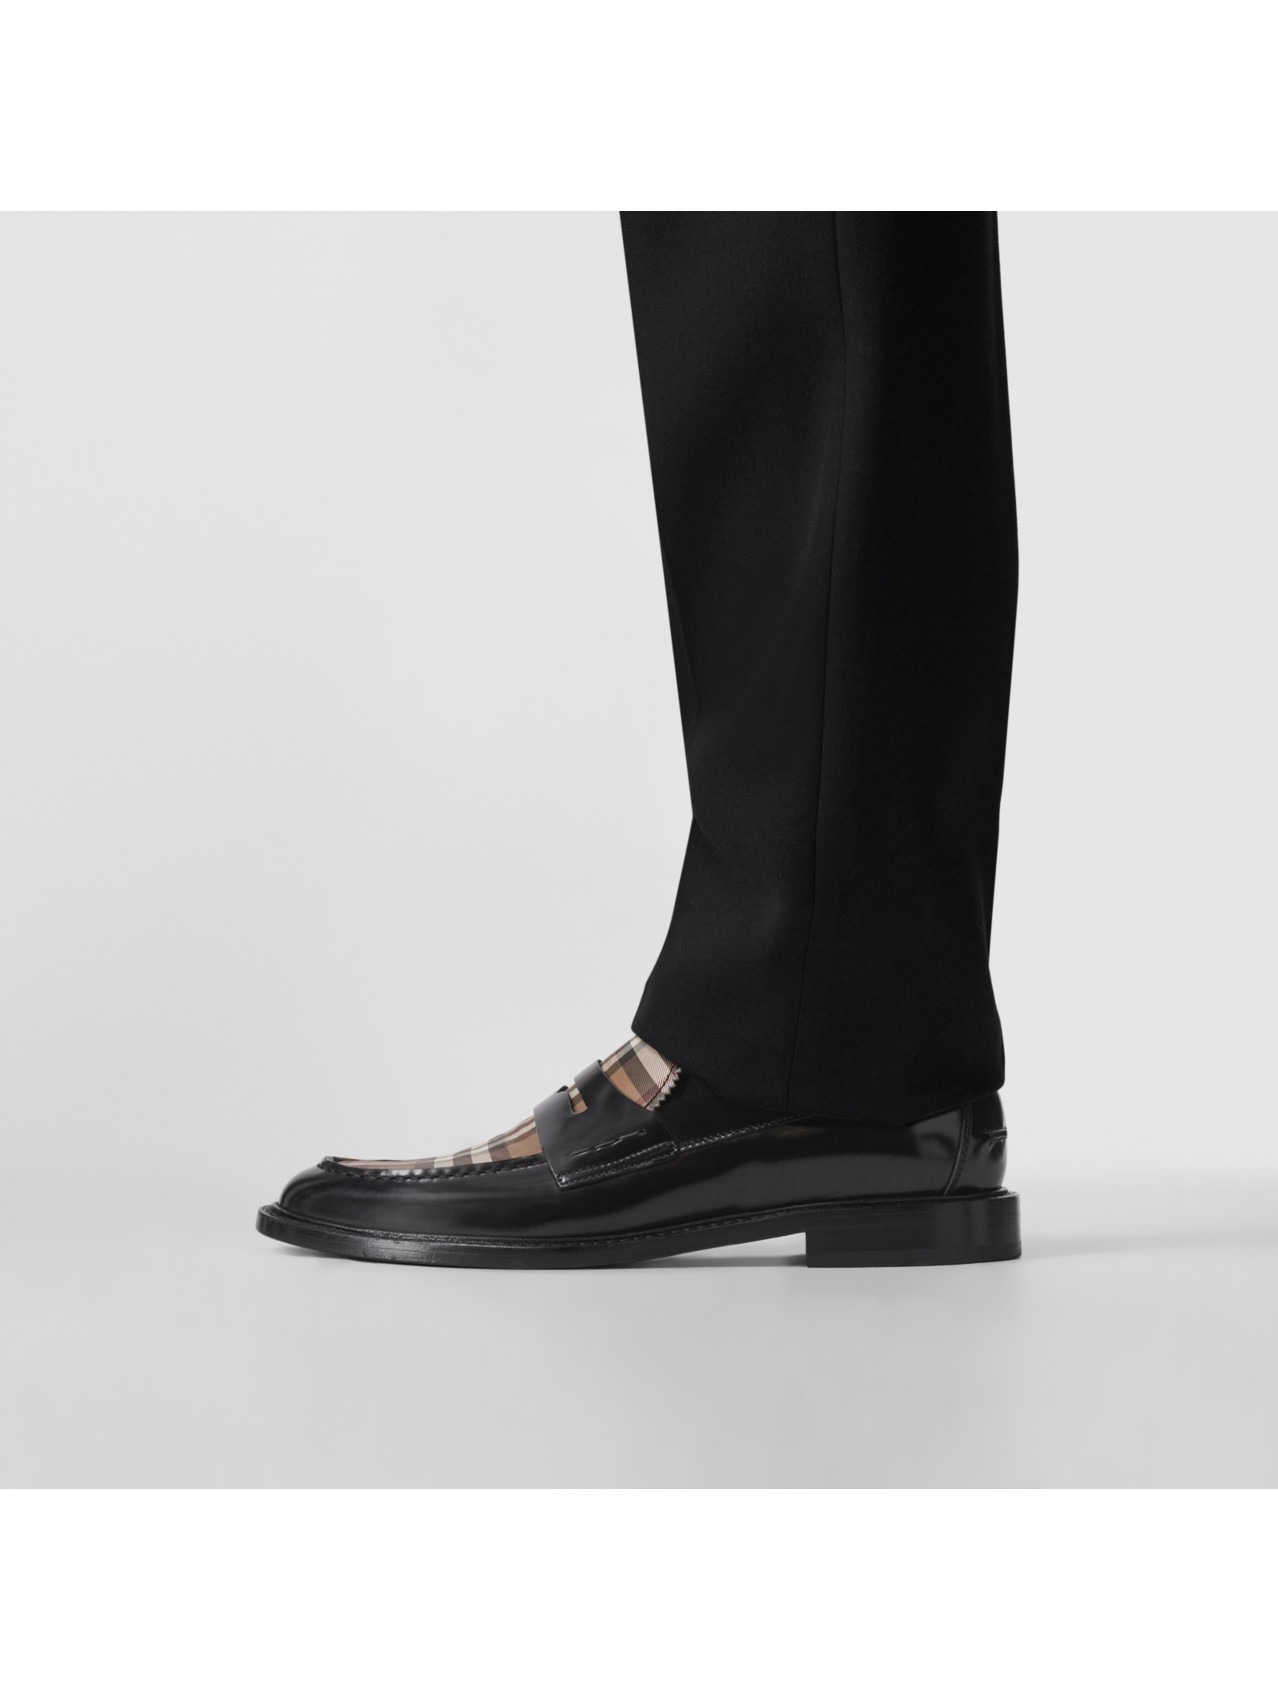 Men’s Shoes | Men’s Casual & Formal Footwear | Burberry® Official